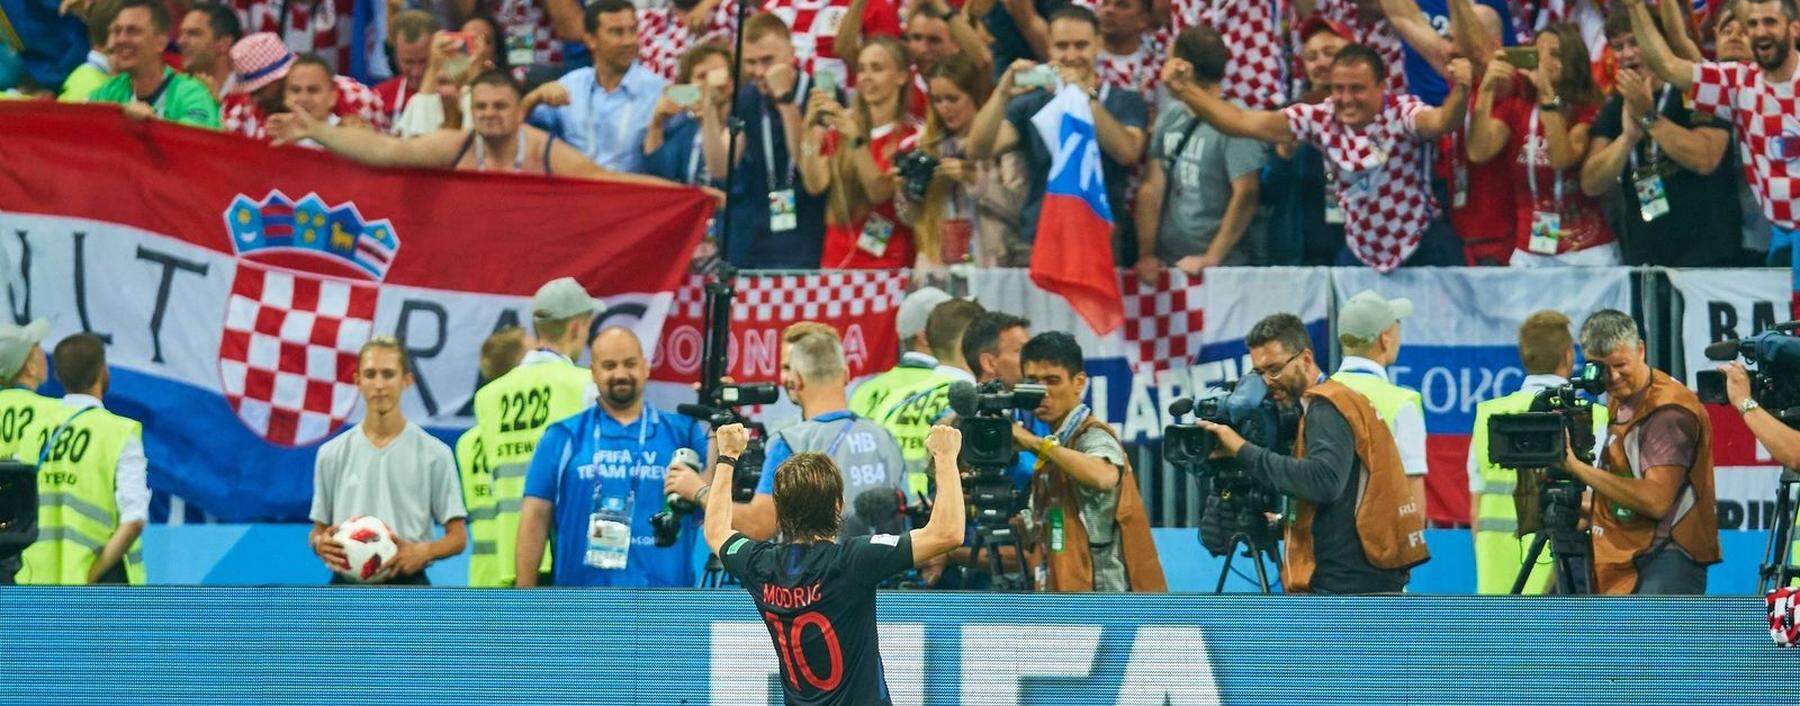 England Croatia Soccer Moscow July 11 2018 Luka MODRIC Croatia Nr 10 Cheering joy emotions